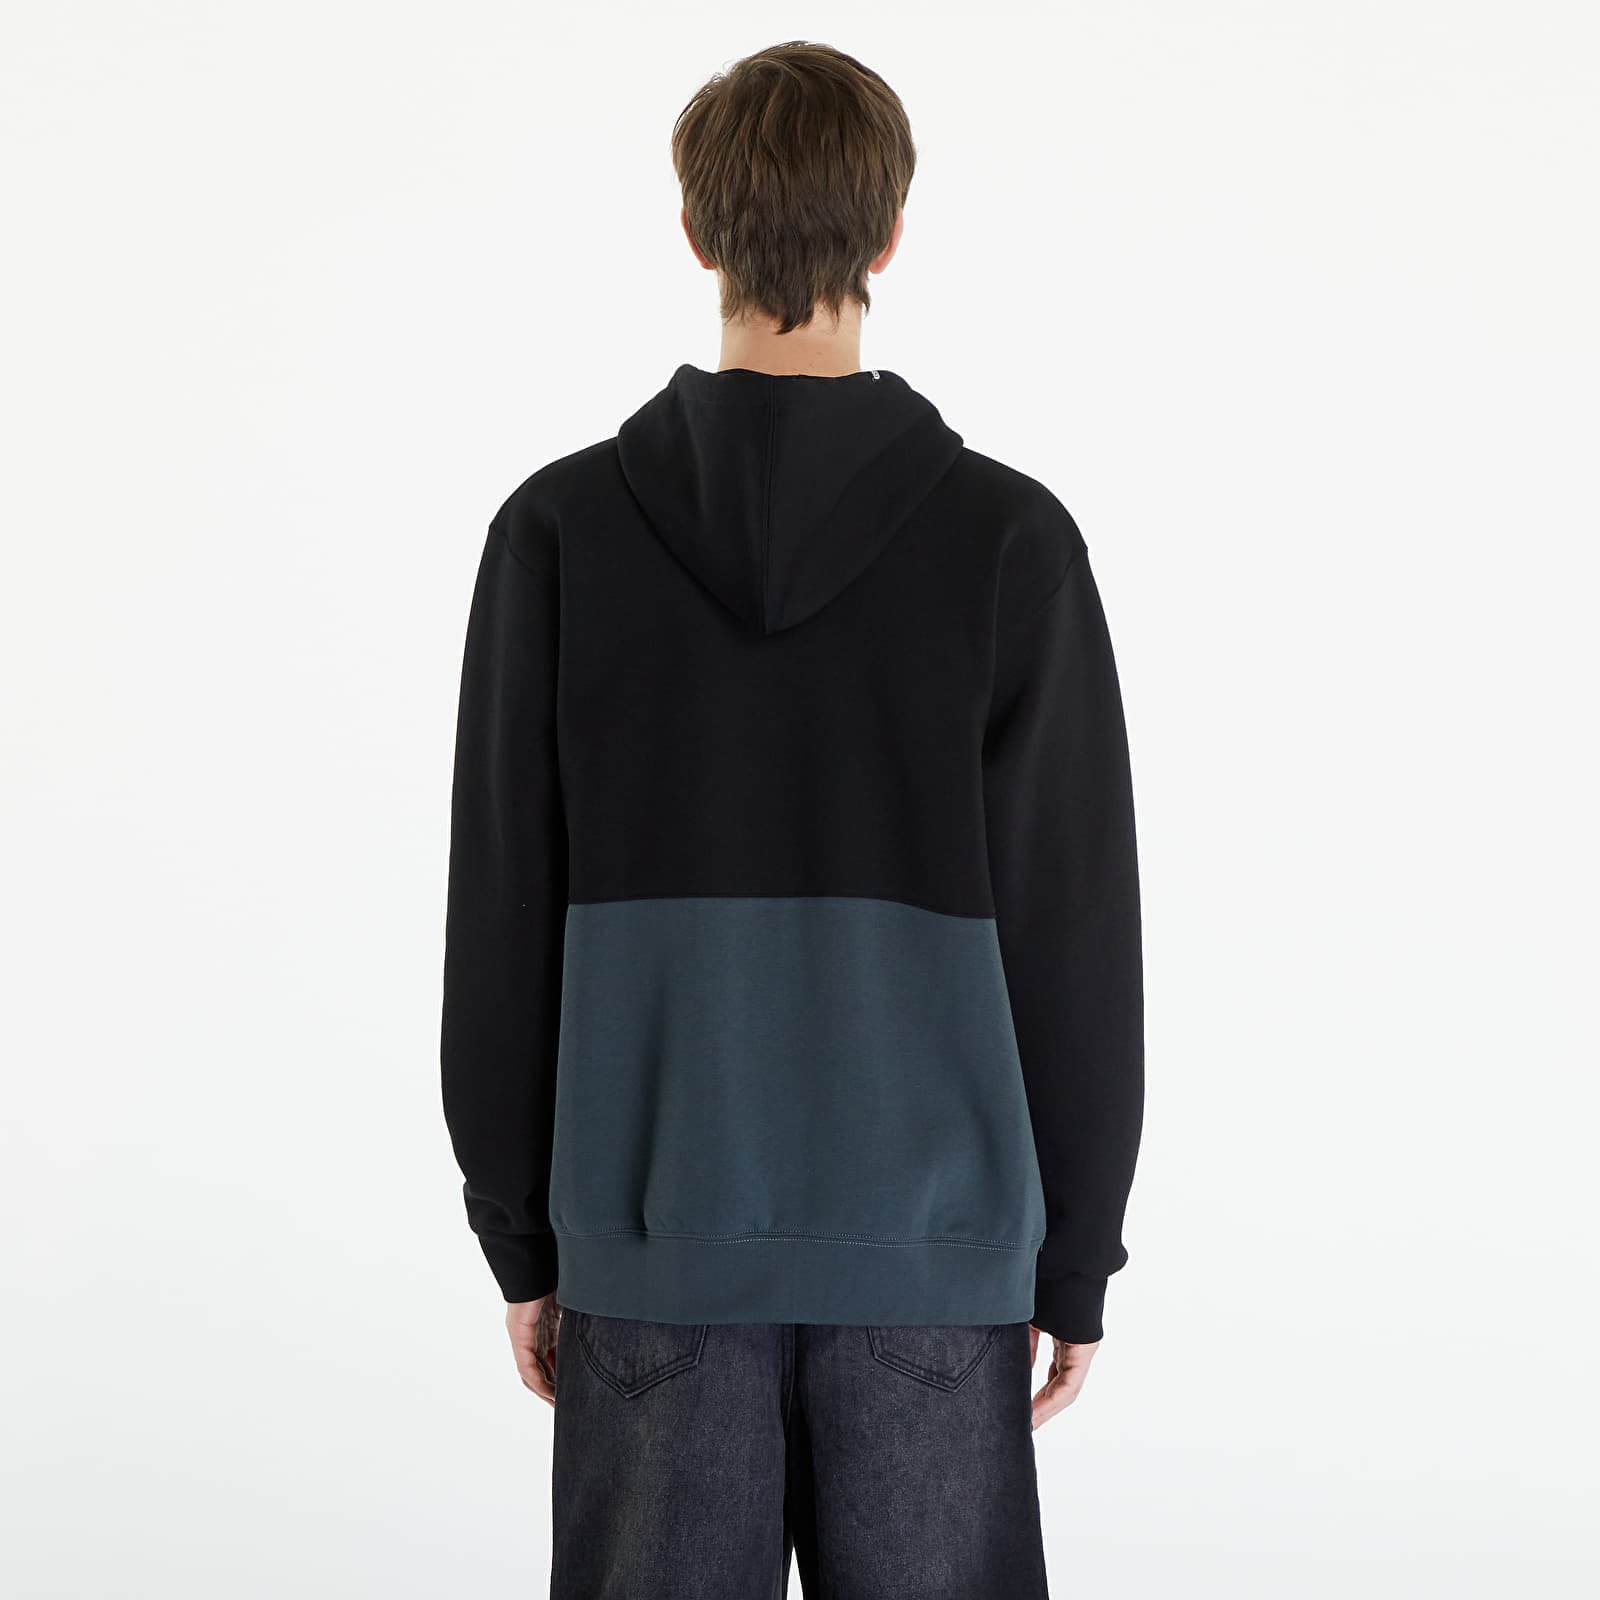 Vick Sweatshirt Black/ Gray